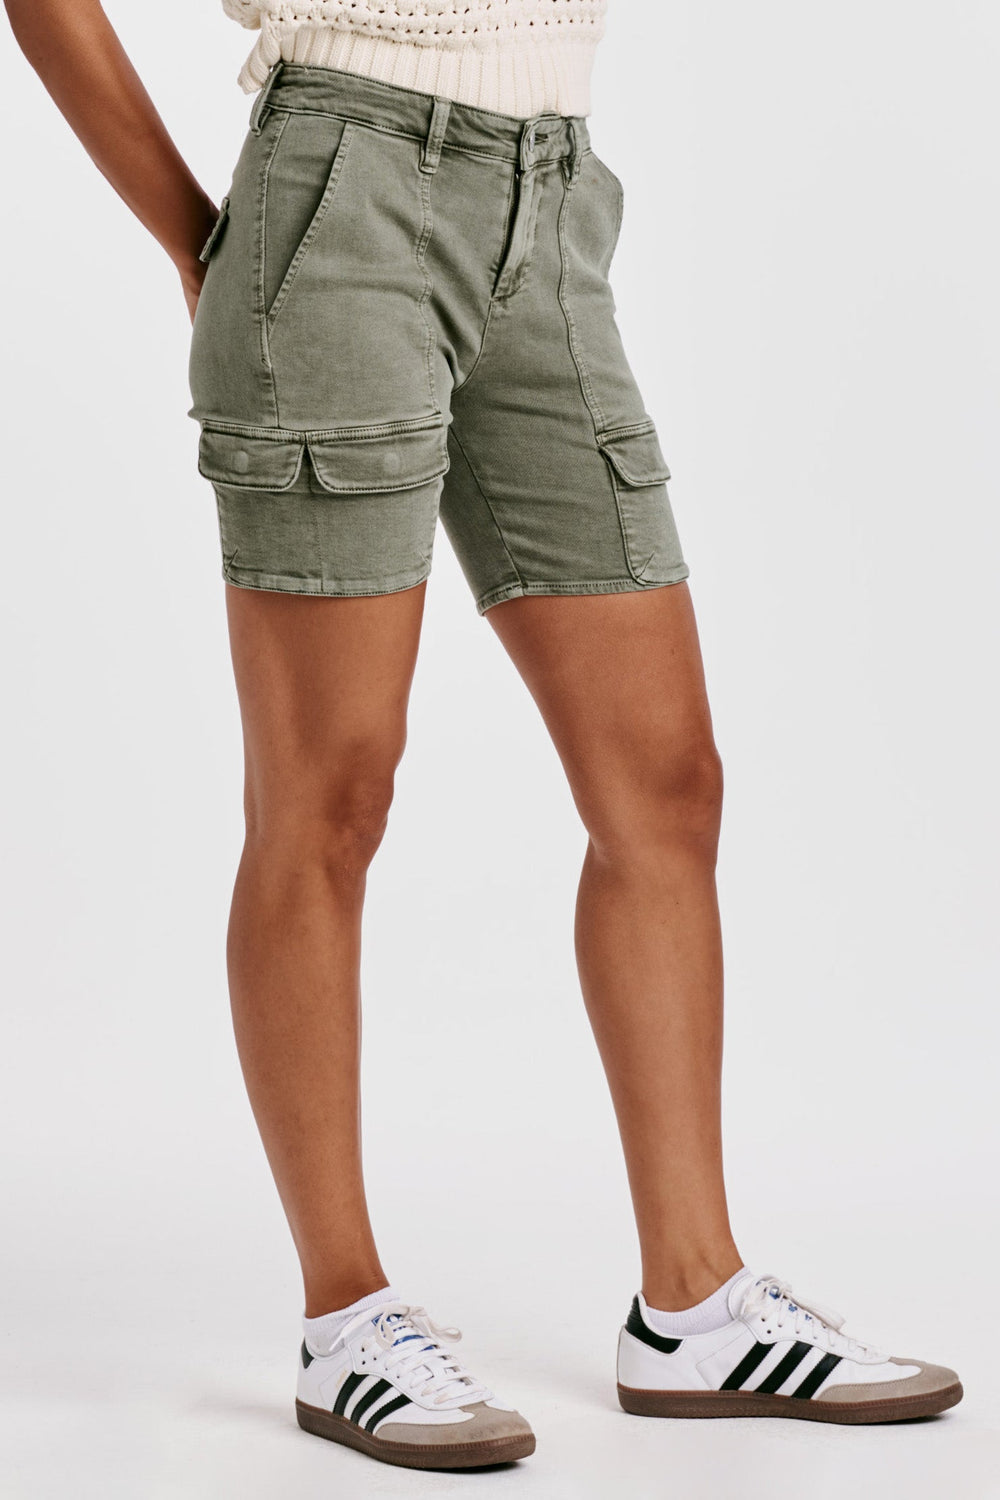 ruthie-super-high-rise-shorts-army-moss